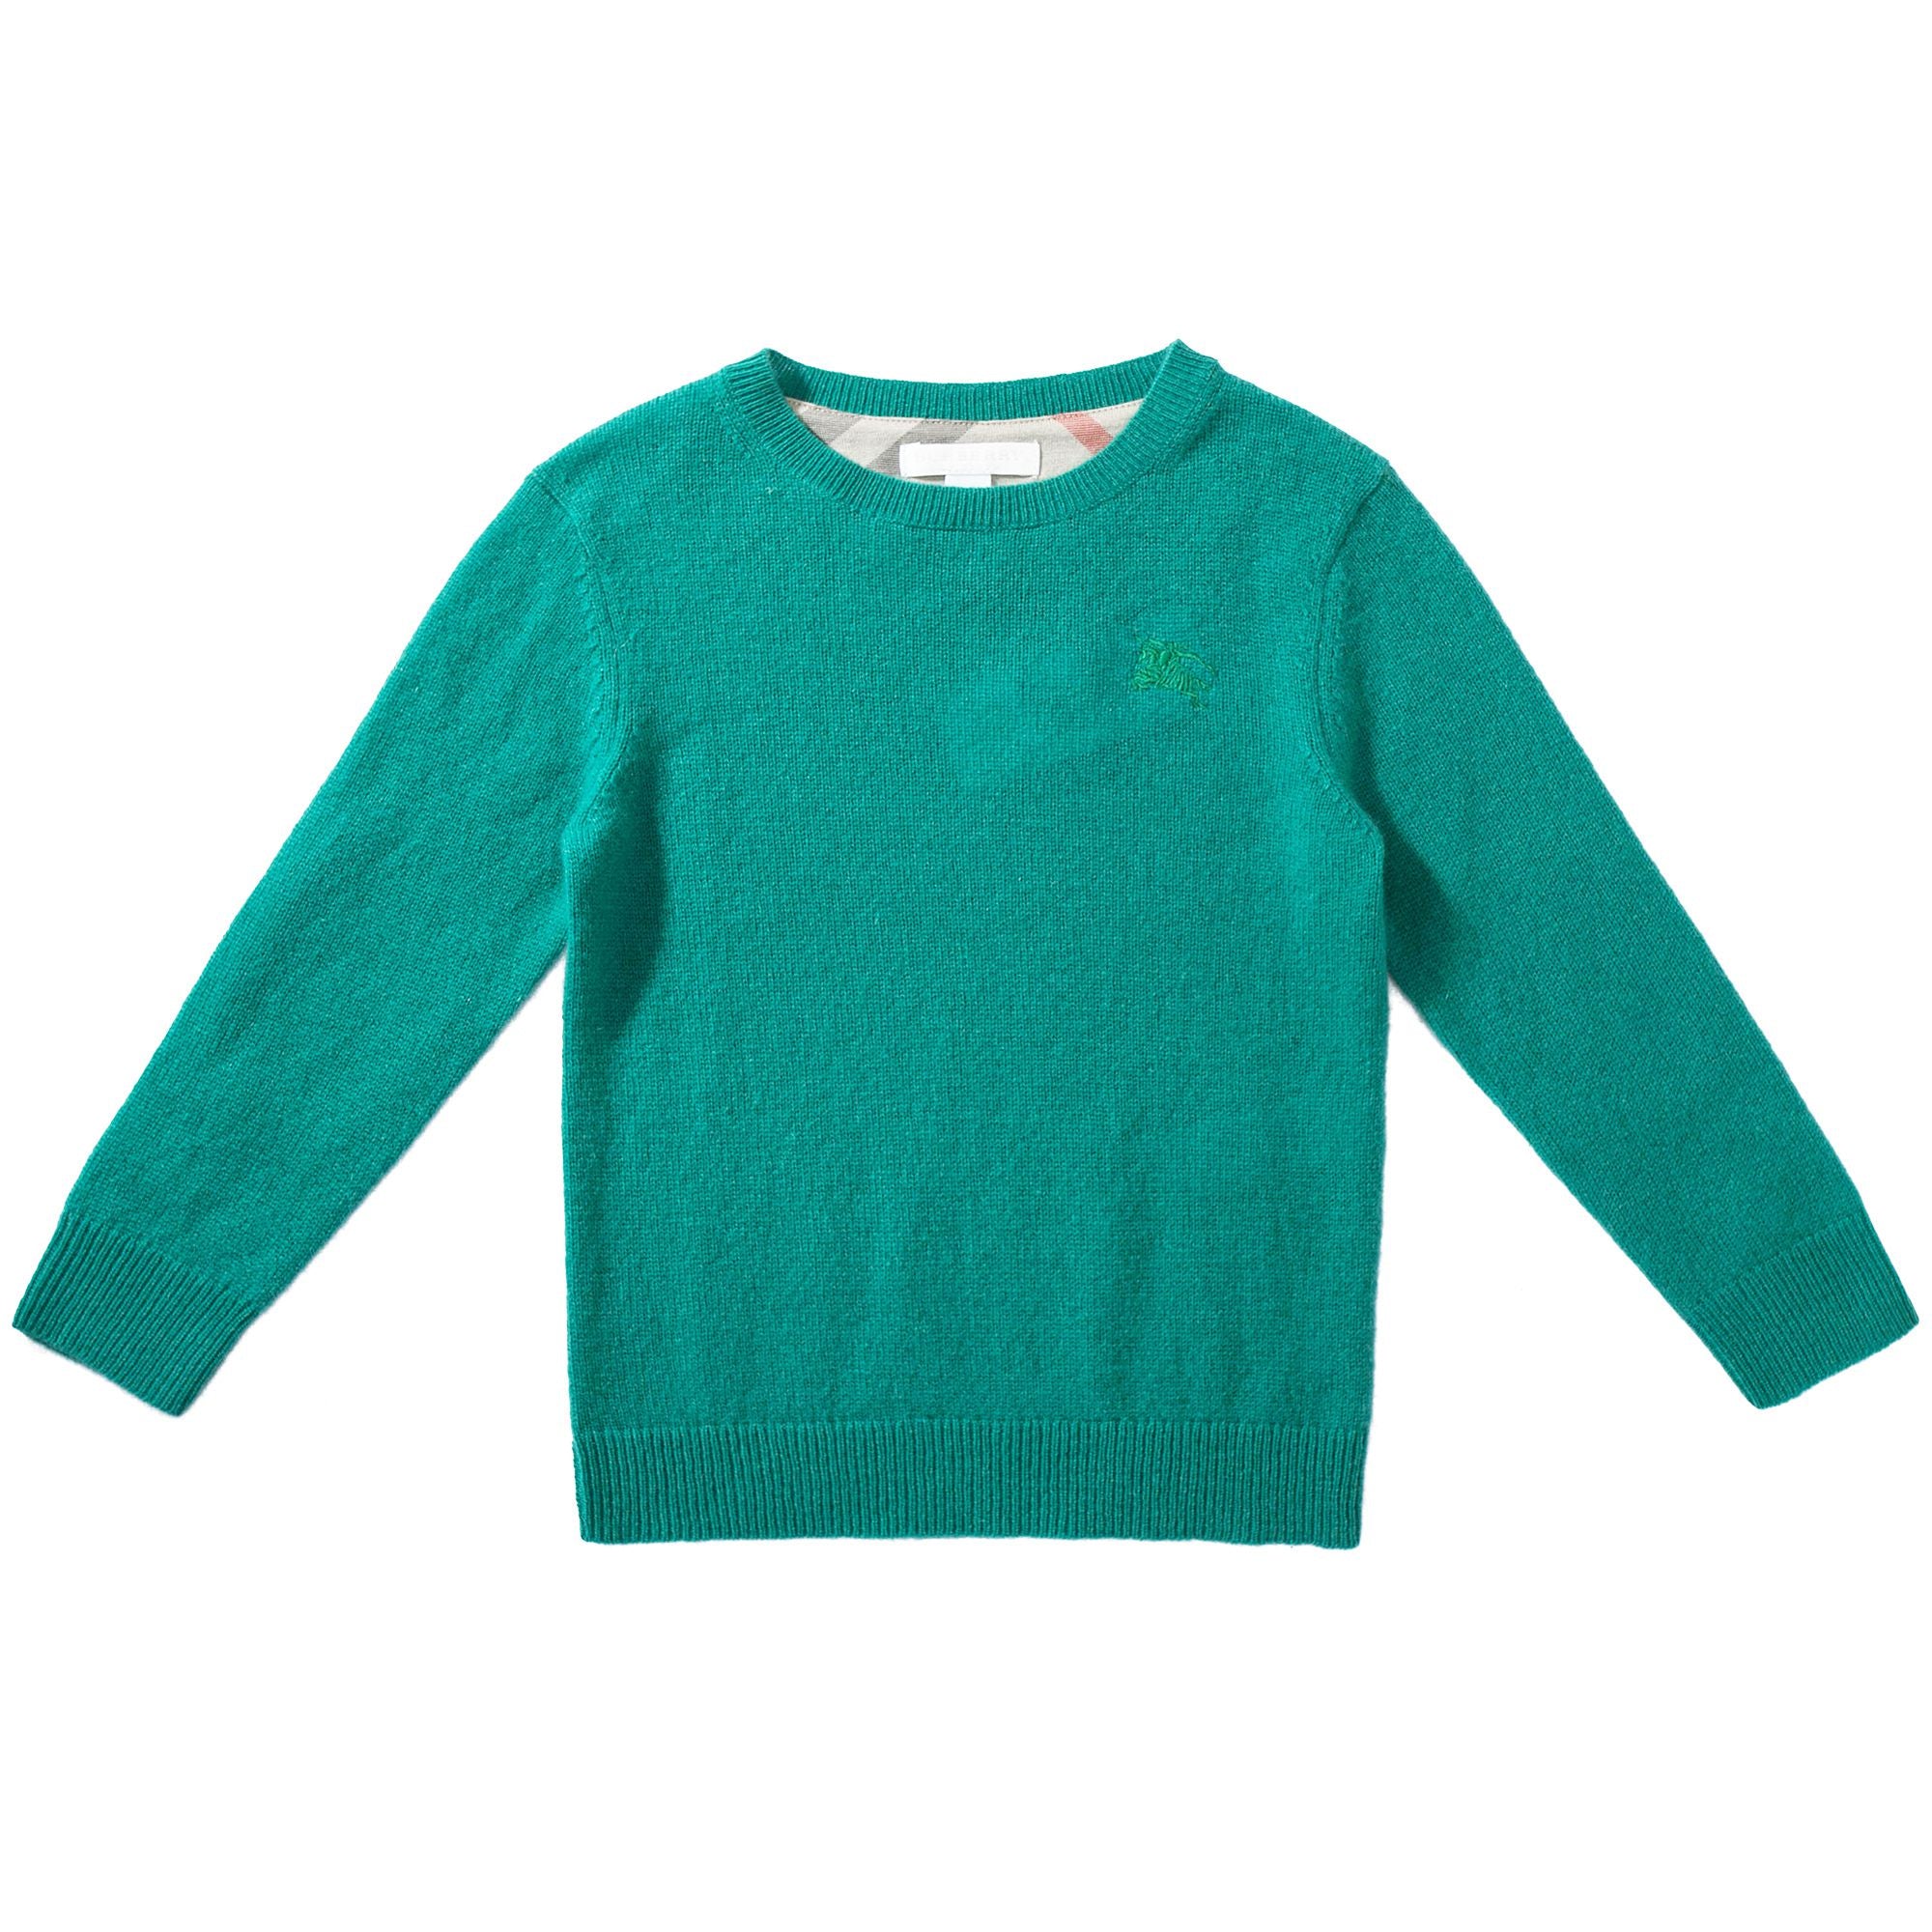 Bays  Bright  Green  Cashmere  Sweater